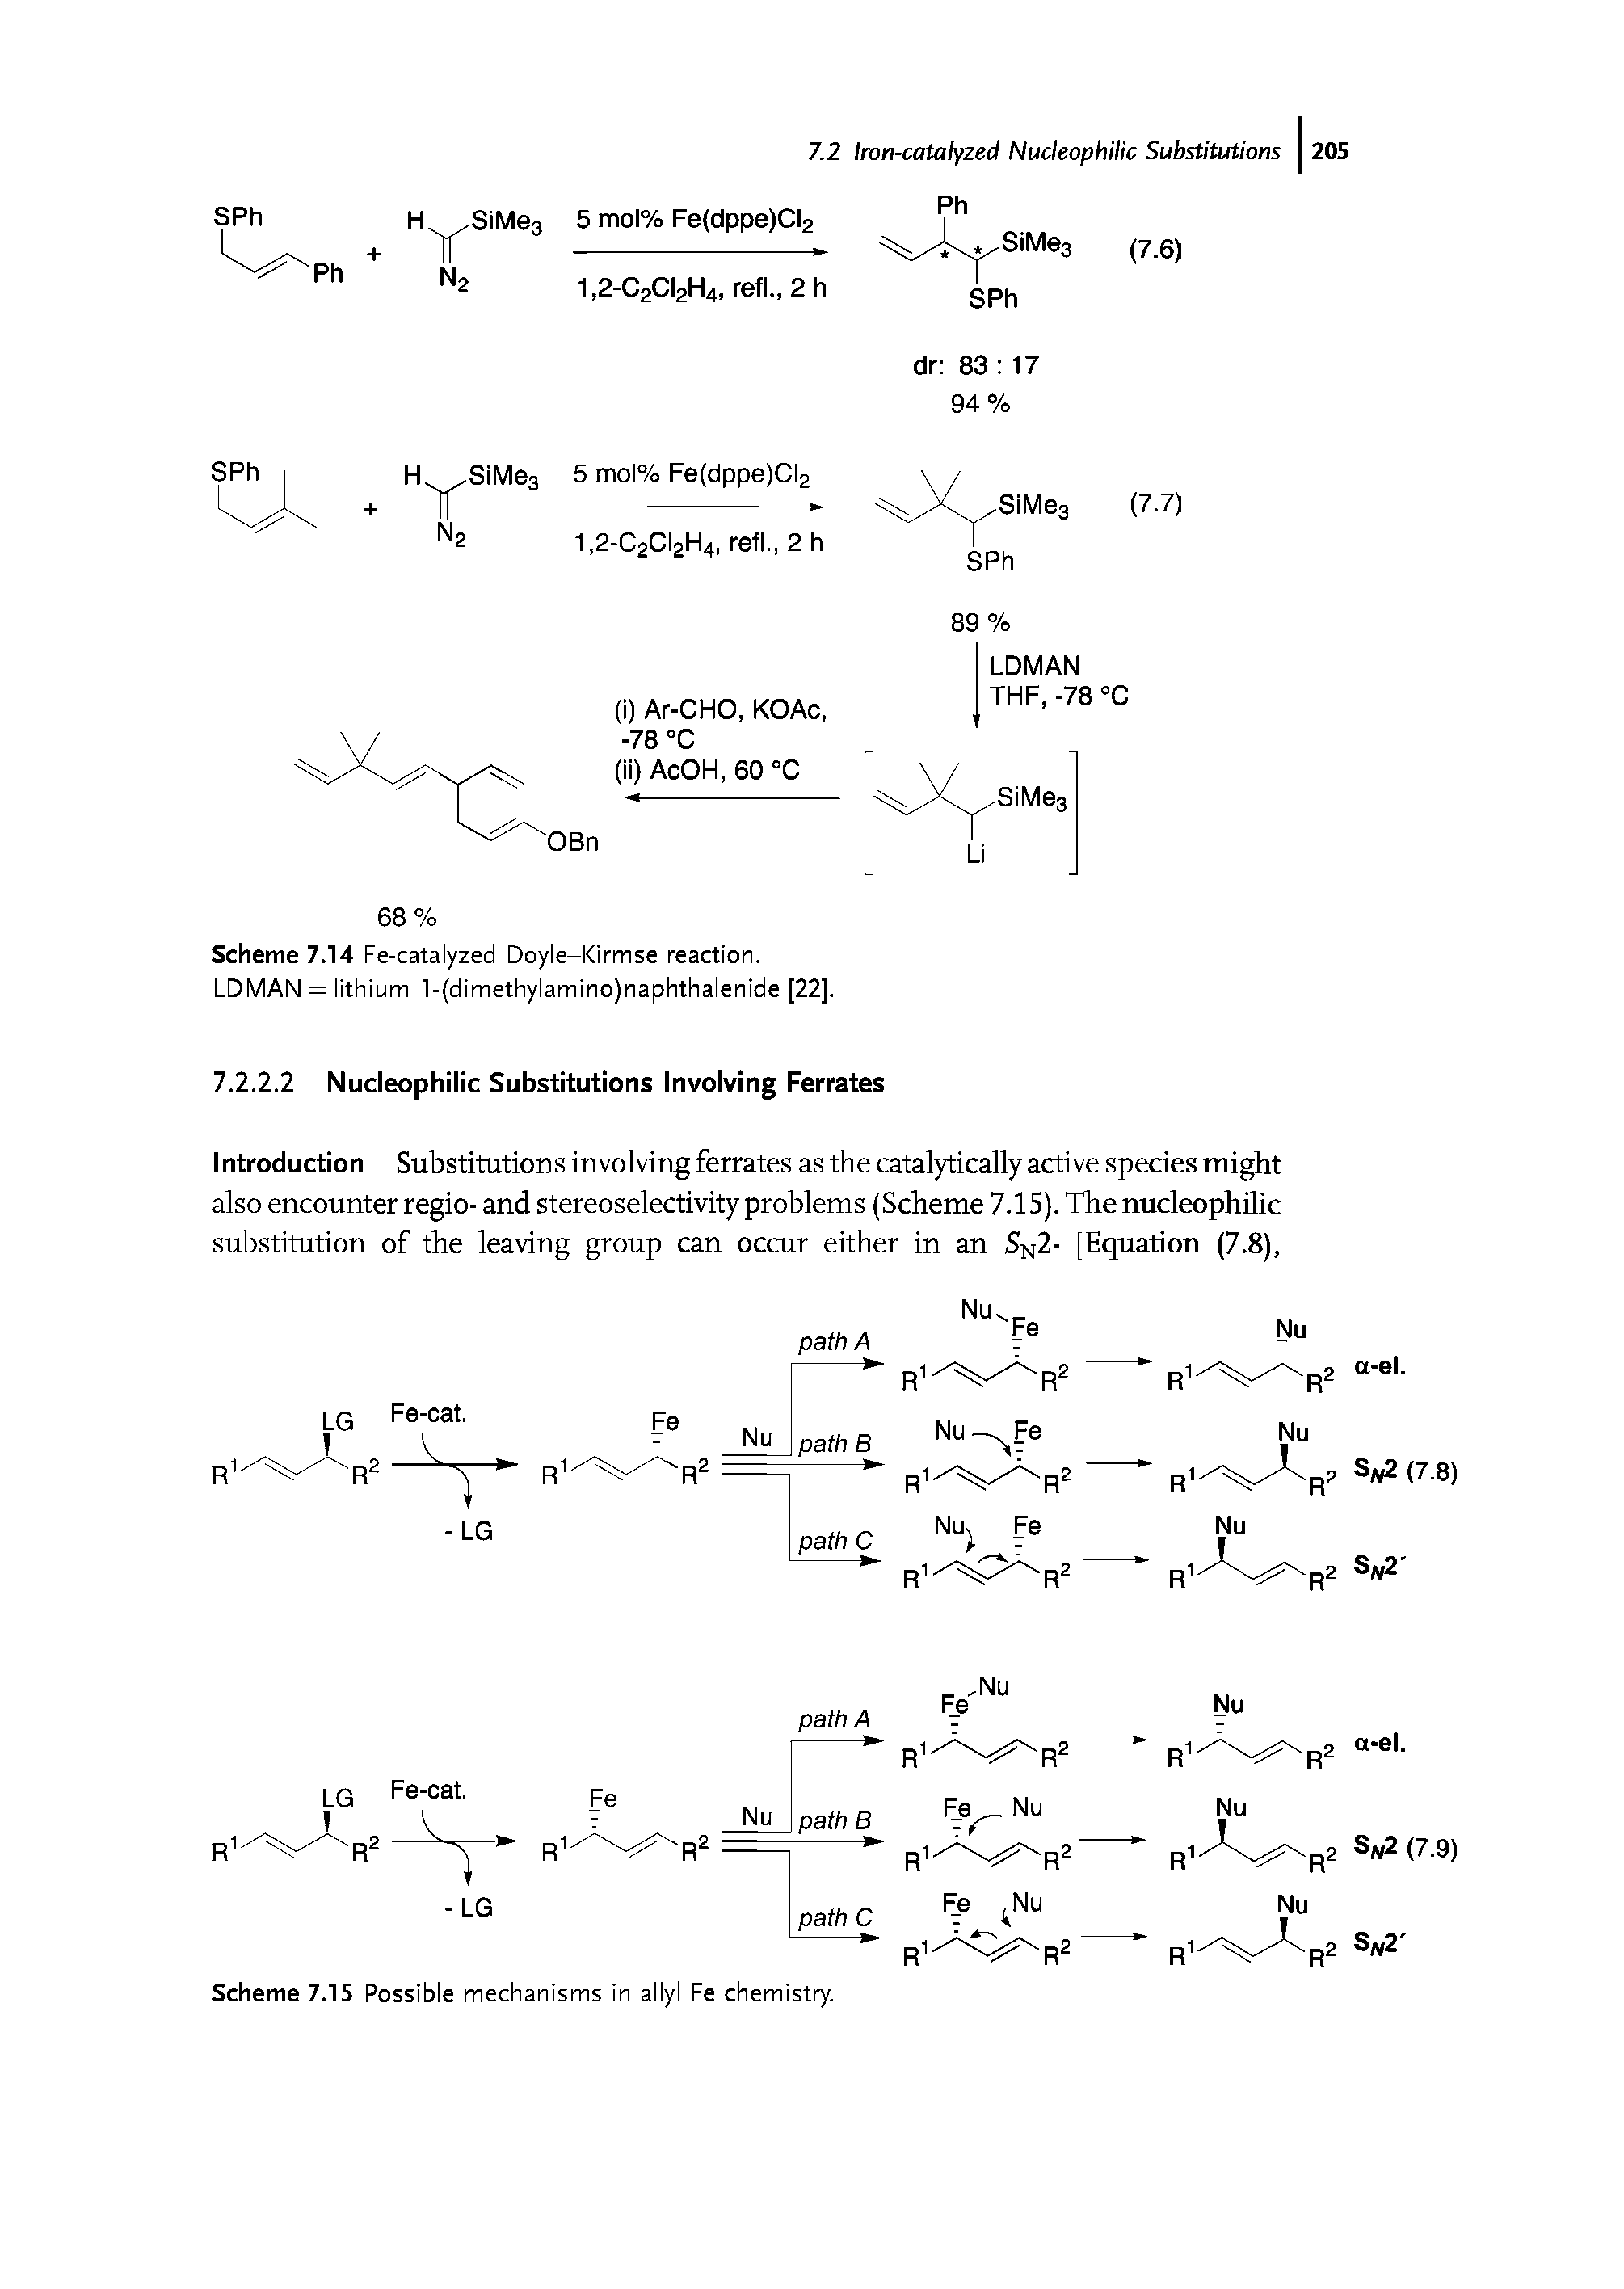 Scheme 7.14 Fe-catalyzed Doyle-Kirmse reaction. LDMAN = lithium l-(dimethylamino)naphthalenide [22].